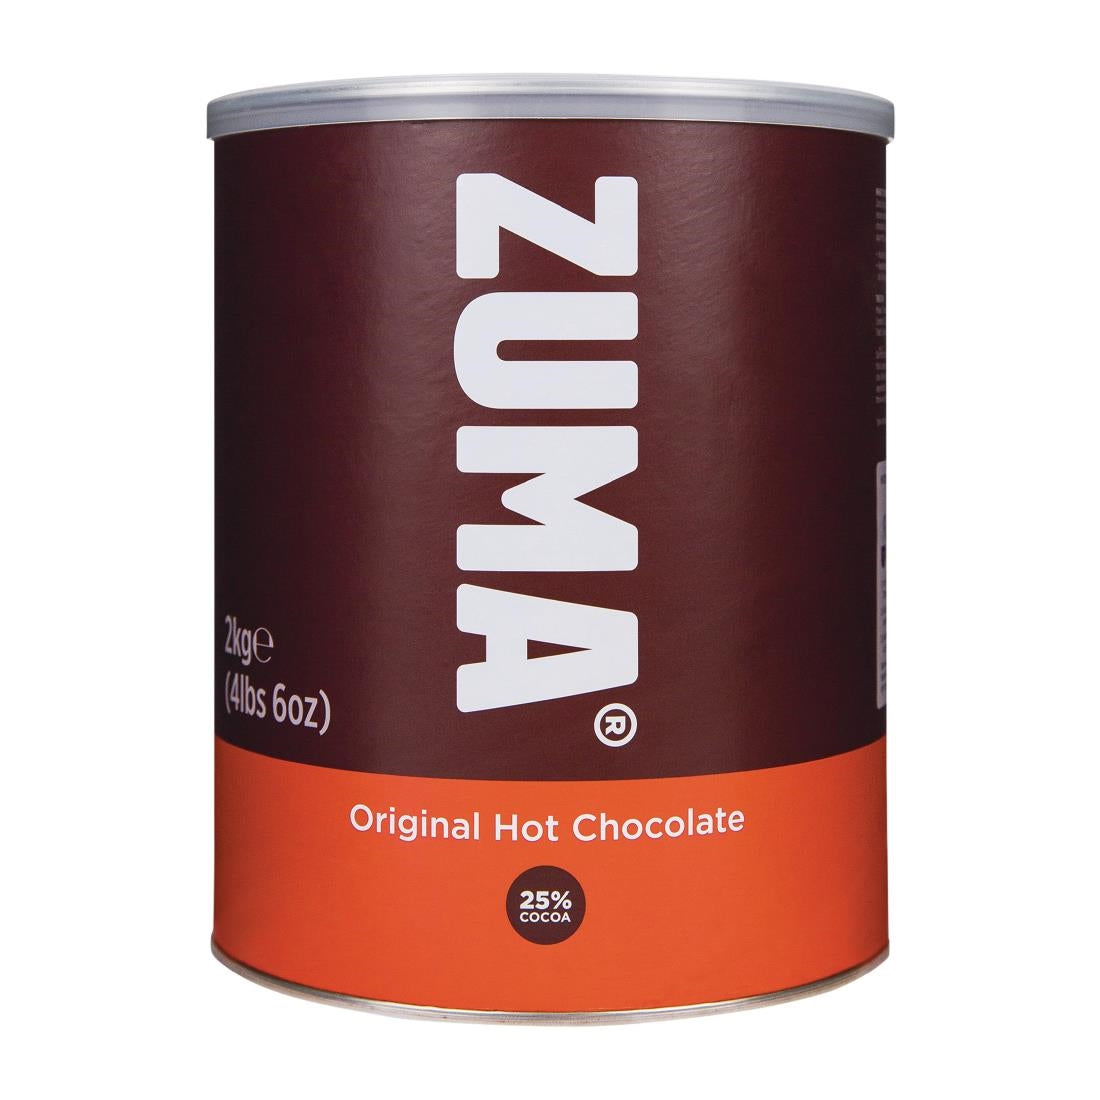 DX616 Zuma Original Hot Chocolate (25% Cocoa) 2kg Tin